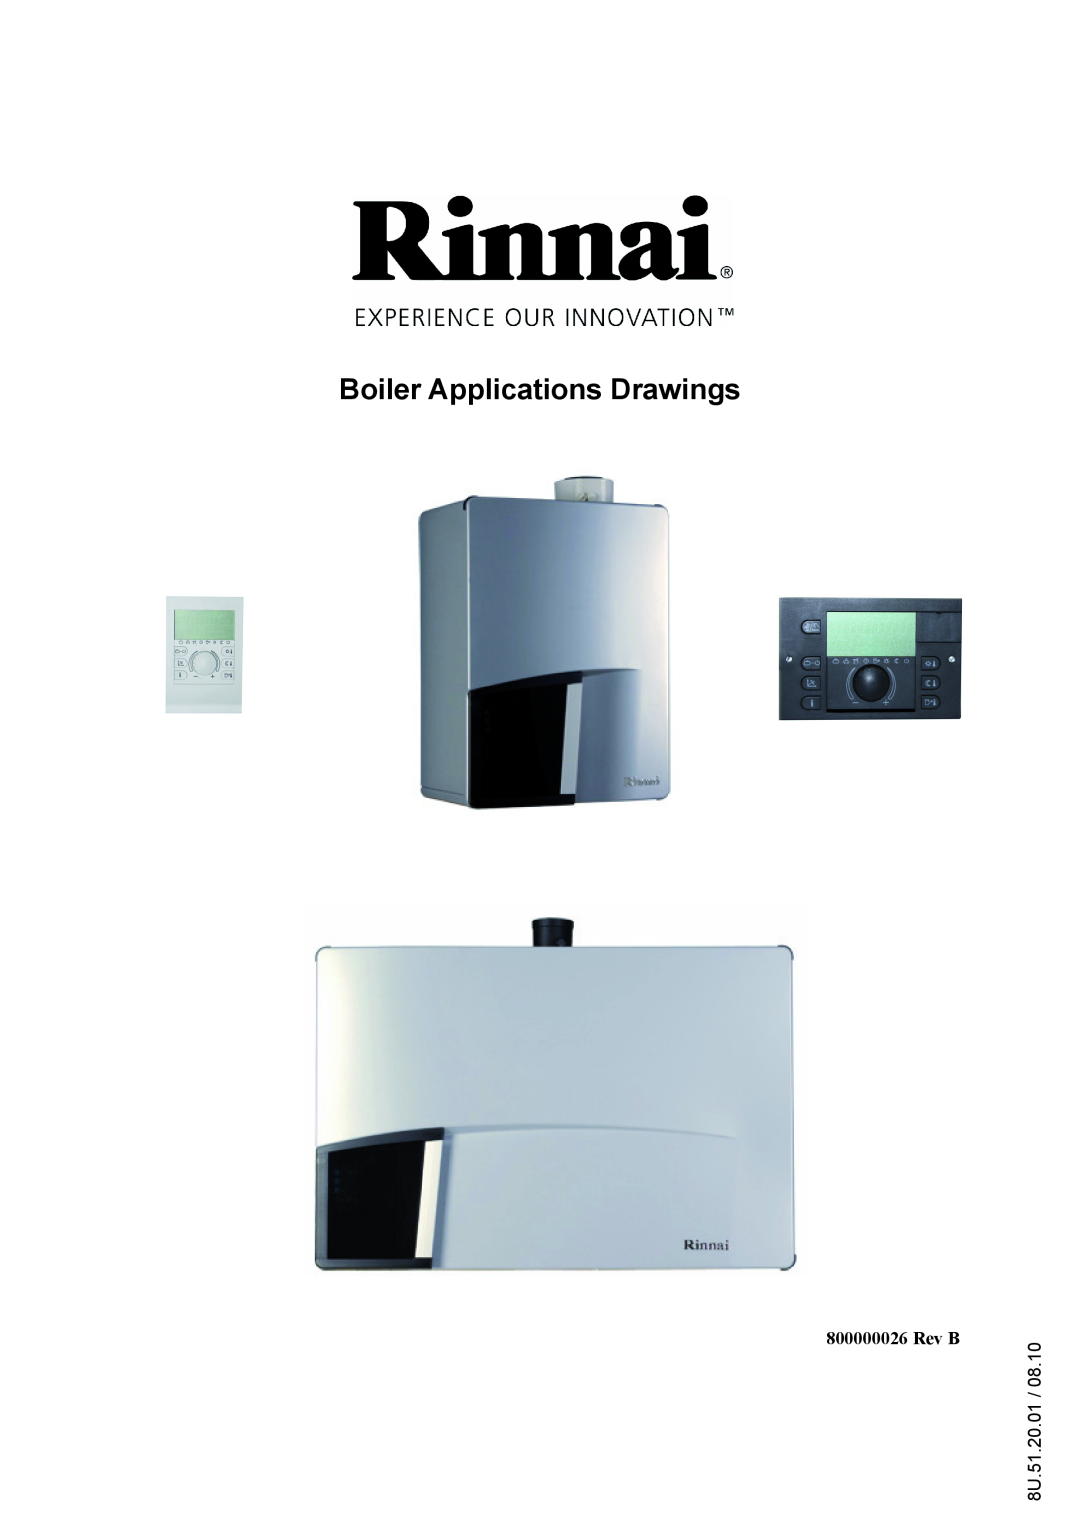 Rinnai QPA-09-0003, QPA-09-0008, QPD-09-0002, QPA-09-0006, QPA-09-0001, QPA-09-0002 manual Boiler Applications Drawings, Rev B 